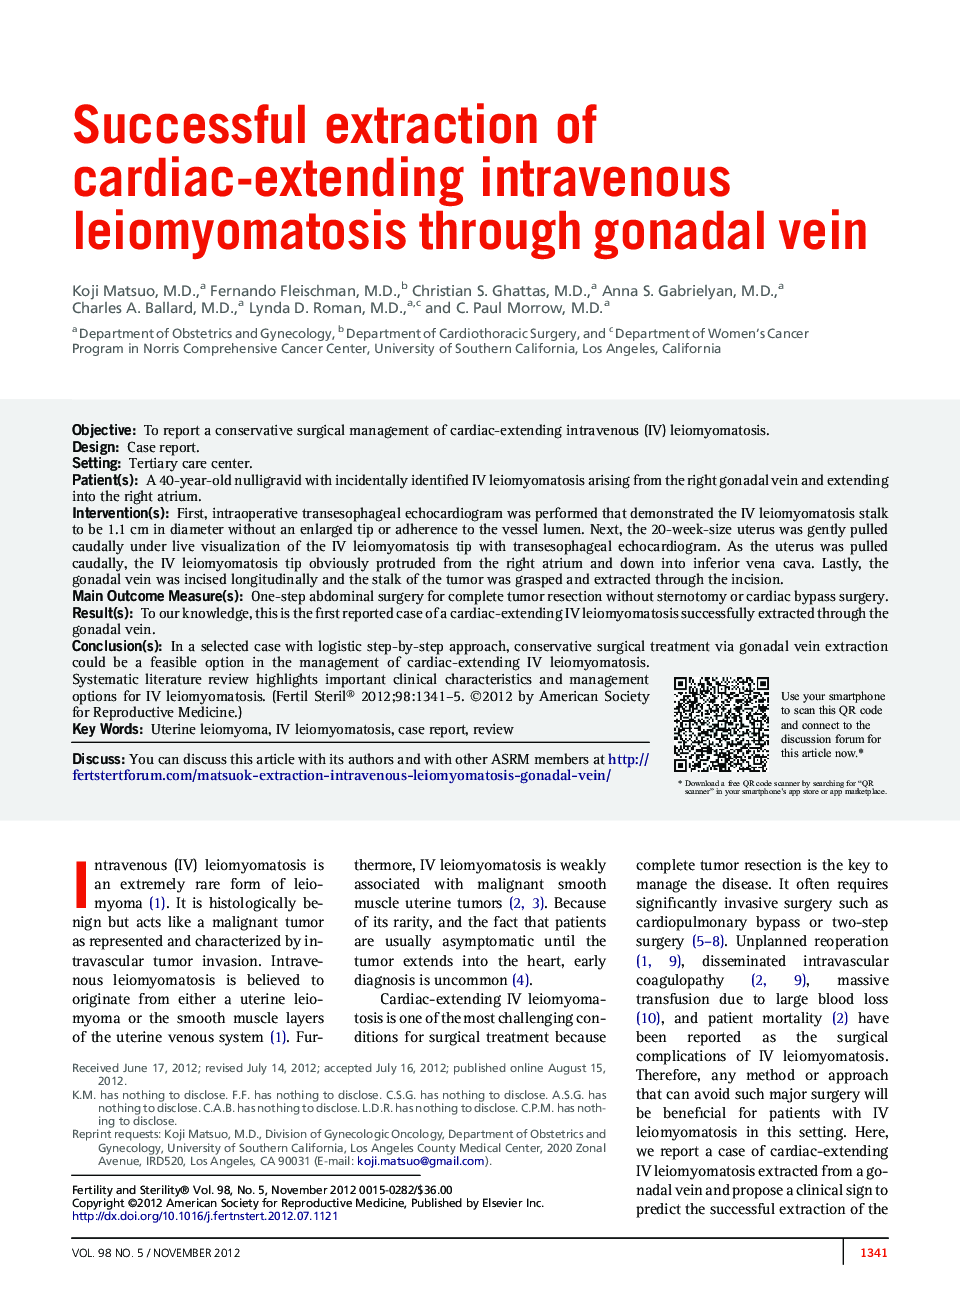 Successful extraction of cardiac-extending intravenous leiomyomatosis through gonadal vein